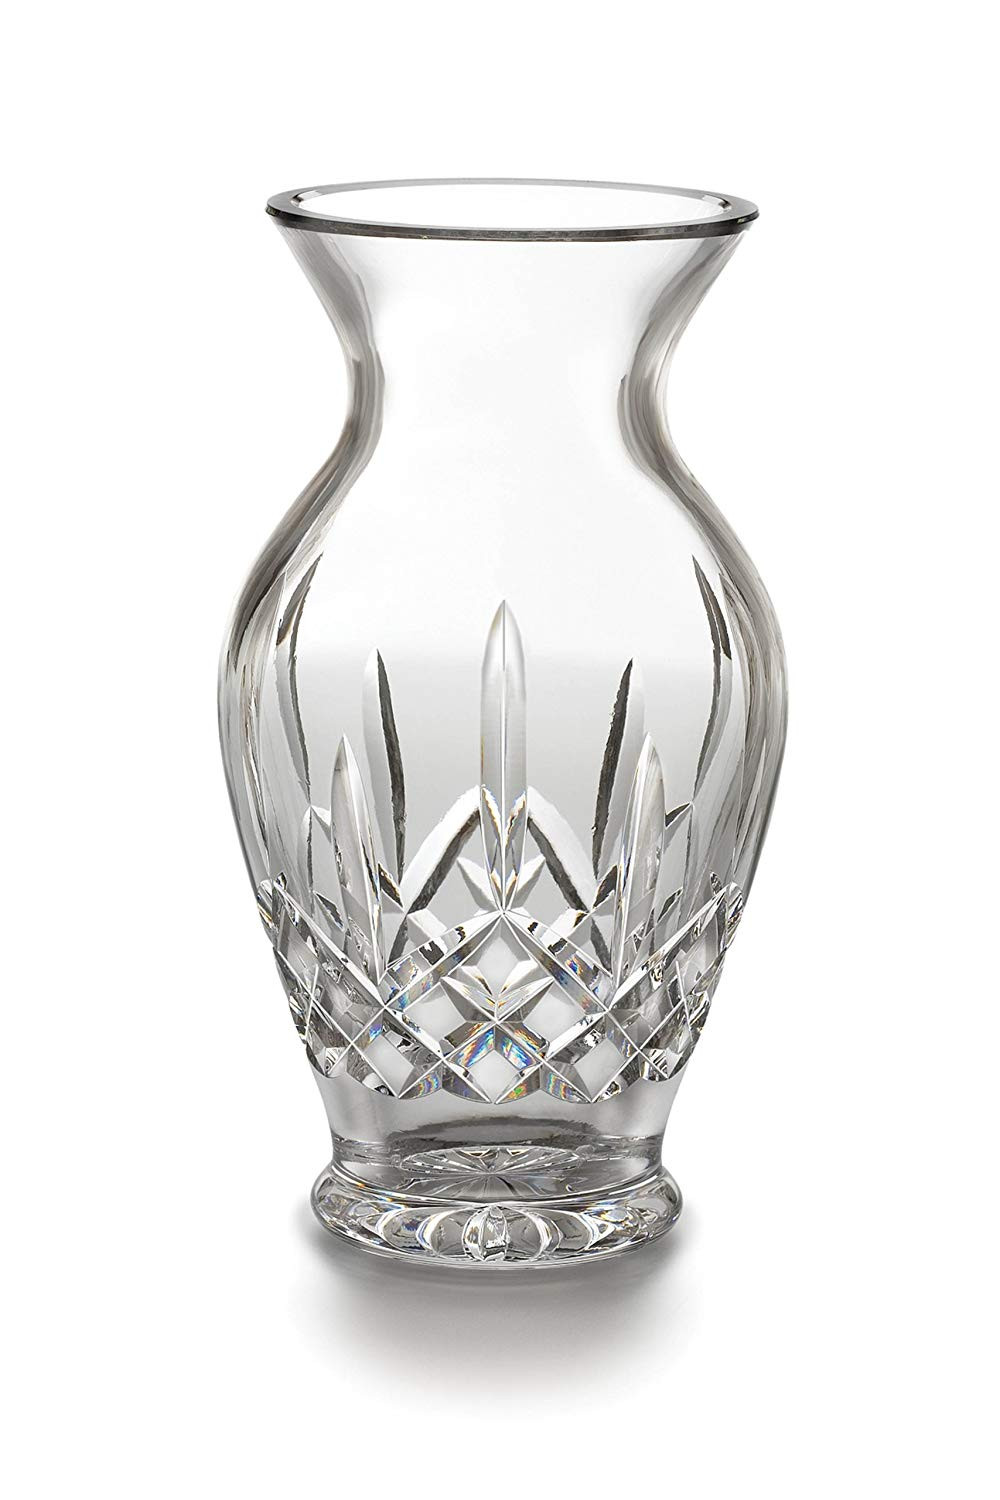 Mikasa Blossom Crystal Vase Of Amazon Com Waterford Lismore 10 Vase Home Kitchen Regarding 81d Jgb61dl Sl1500